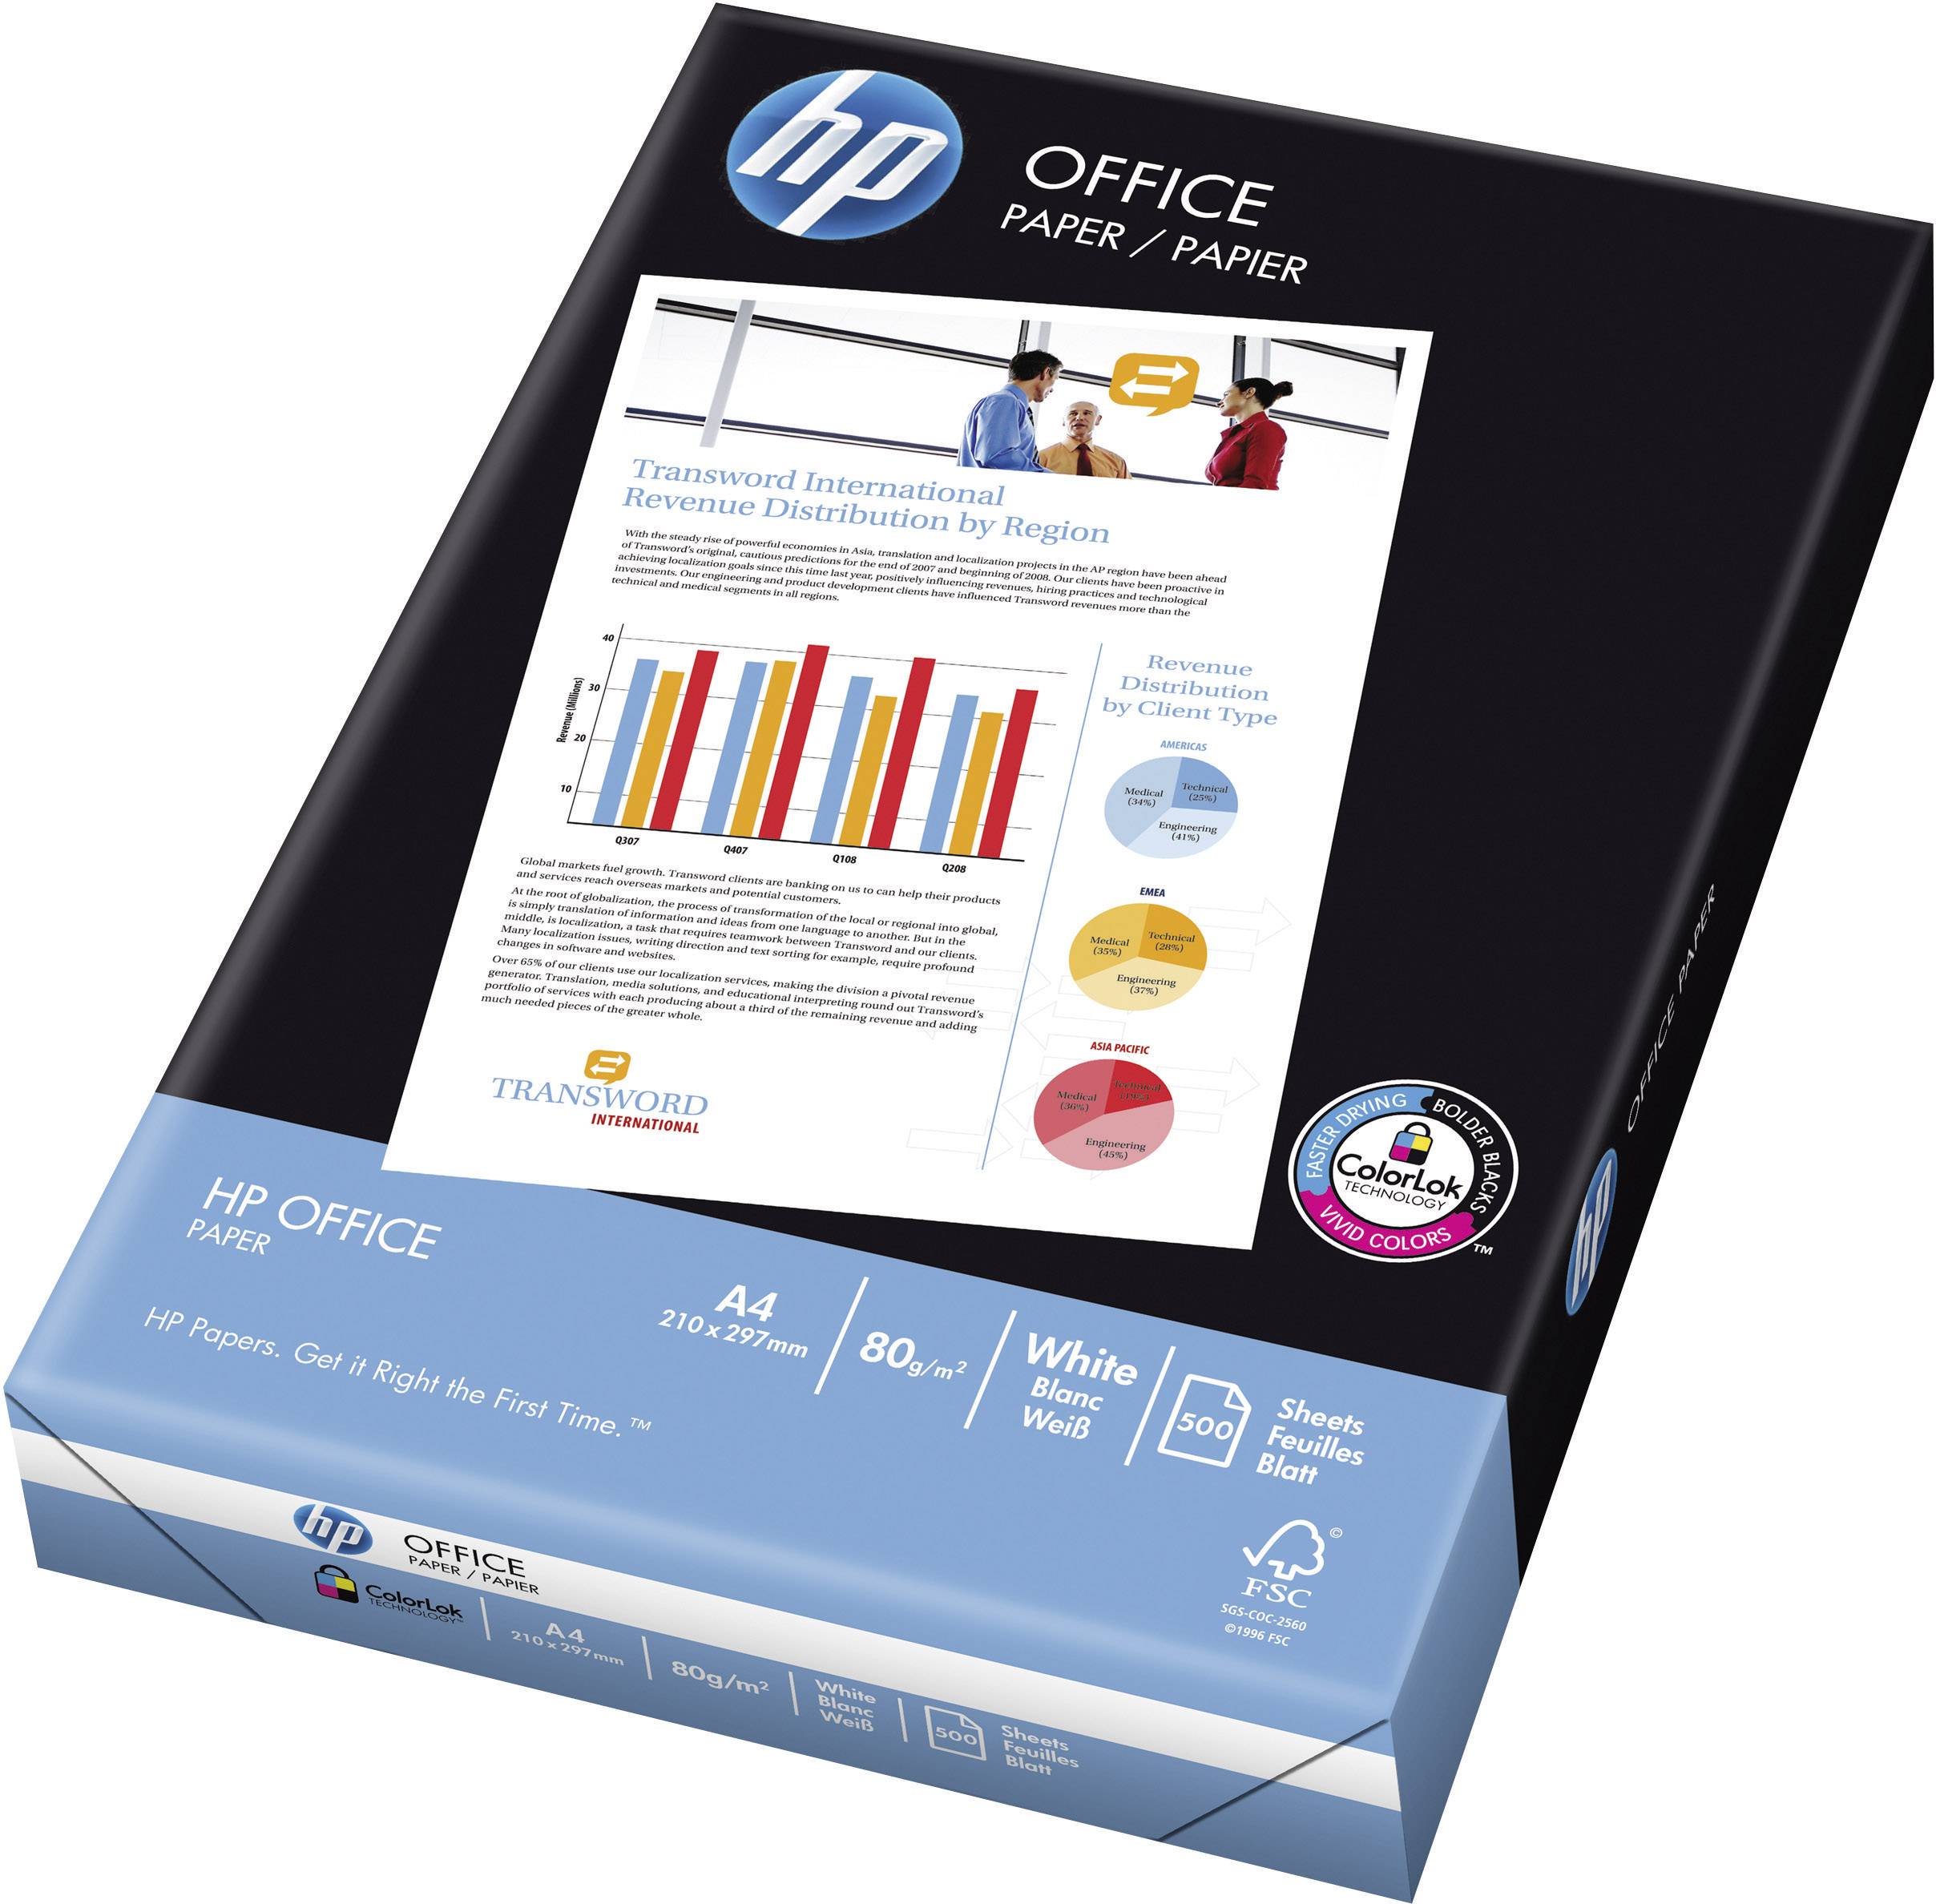 HP Office Paper CHP110 Universal paper 80 g/m² sheet White | Conrad.com